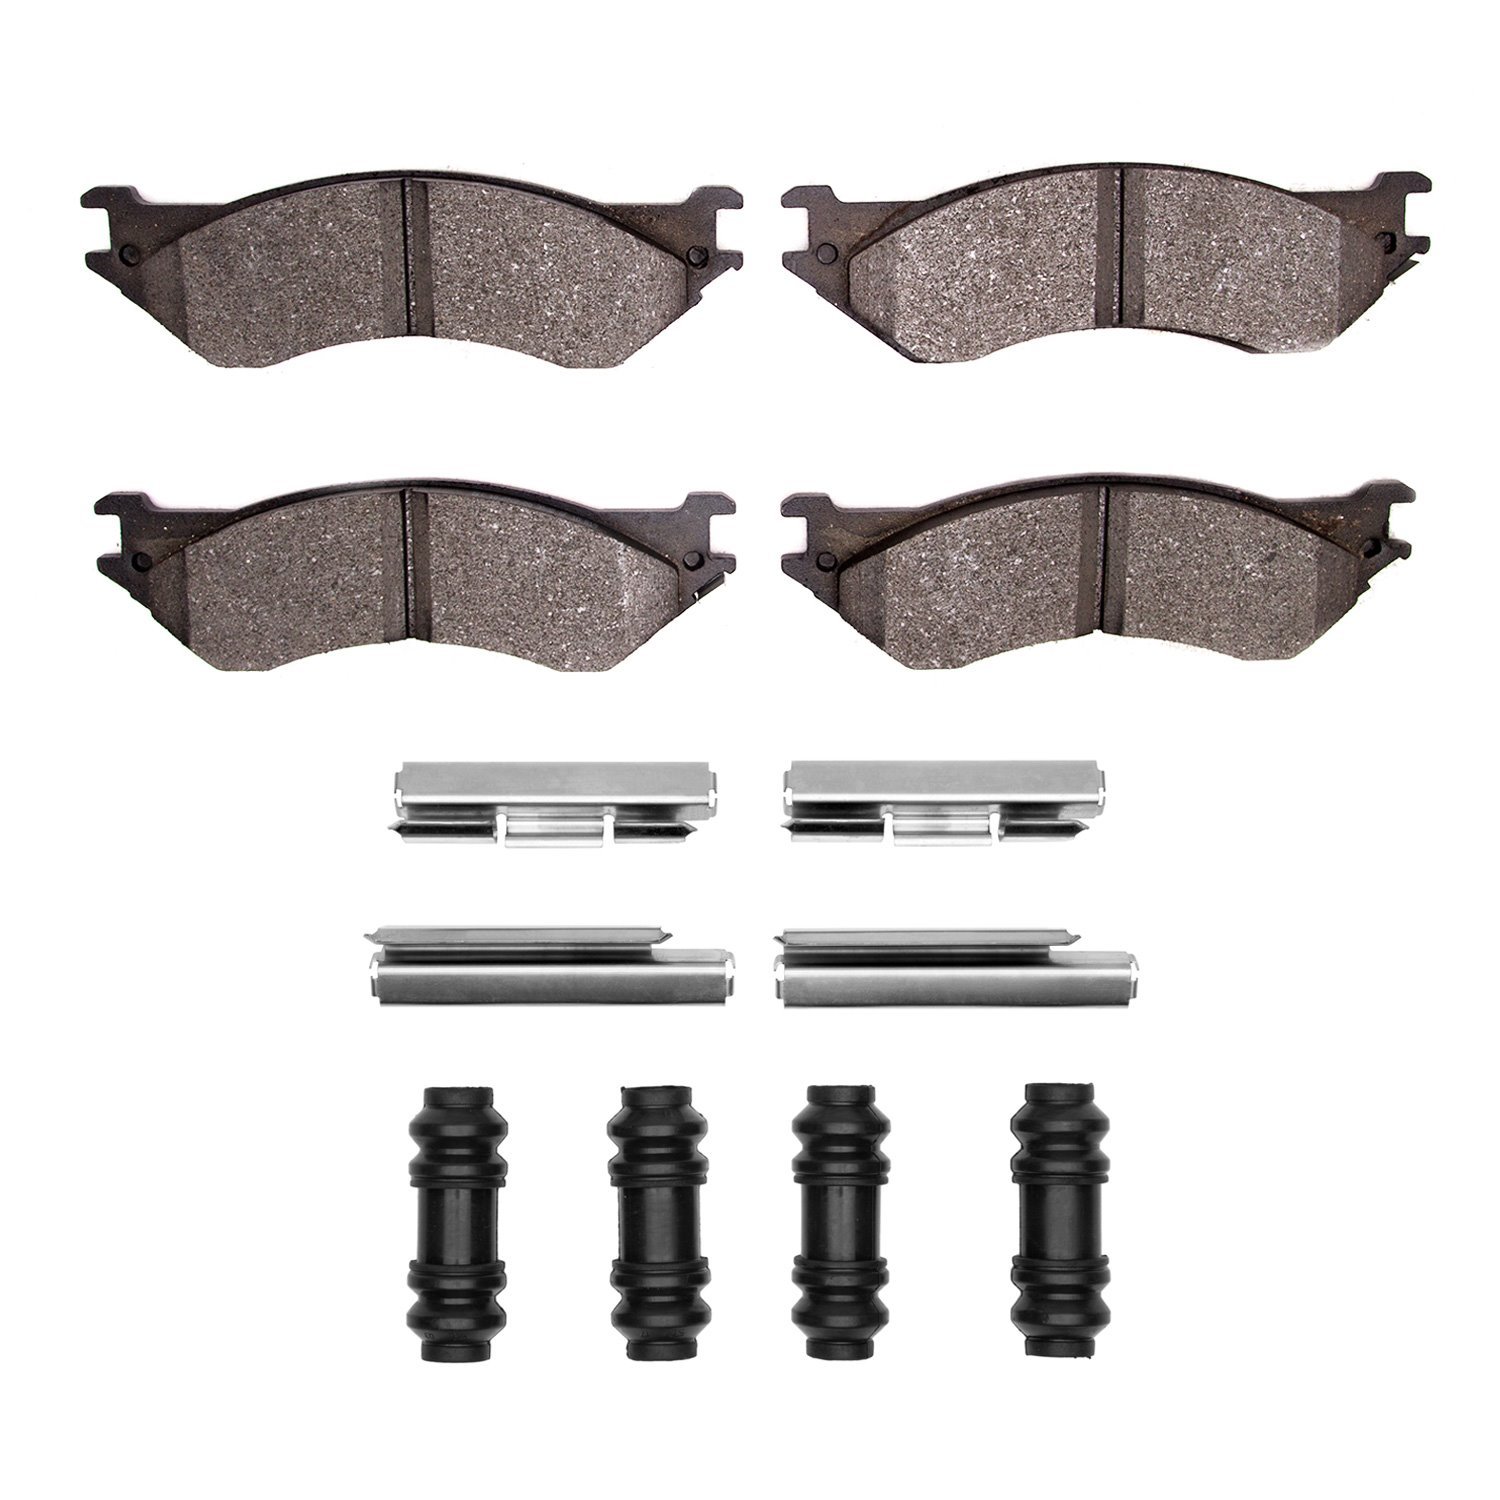 1310-0702-01 3000-Series Ceramic Brake Pads & Hardware Kit, 1997-2004 Multiple Makes/Models, Position: Front